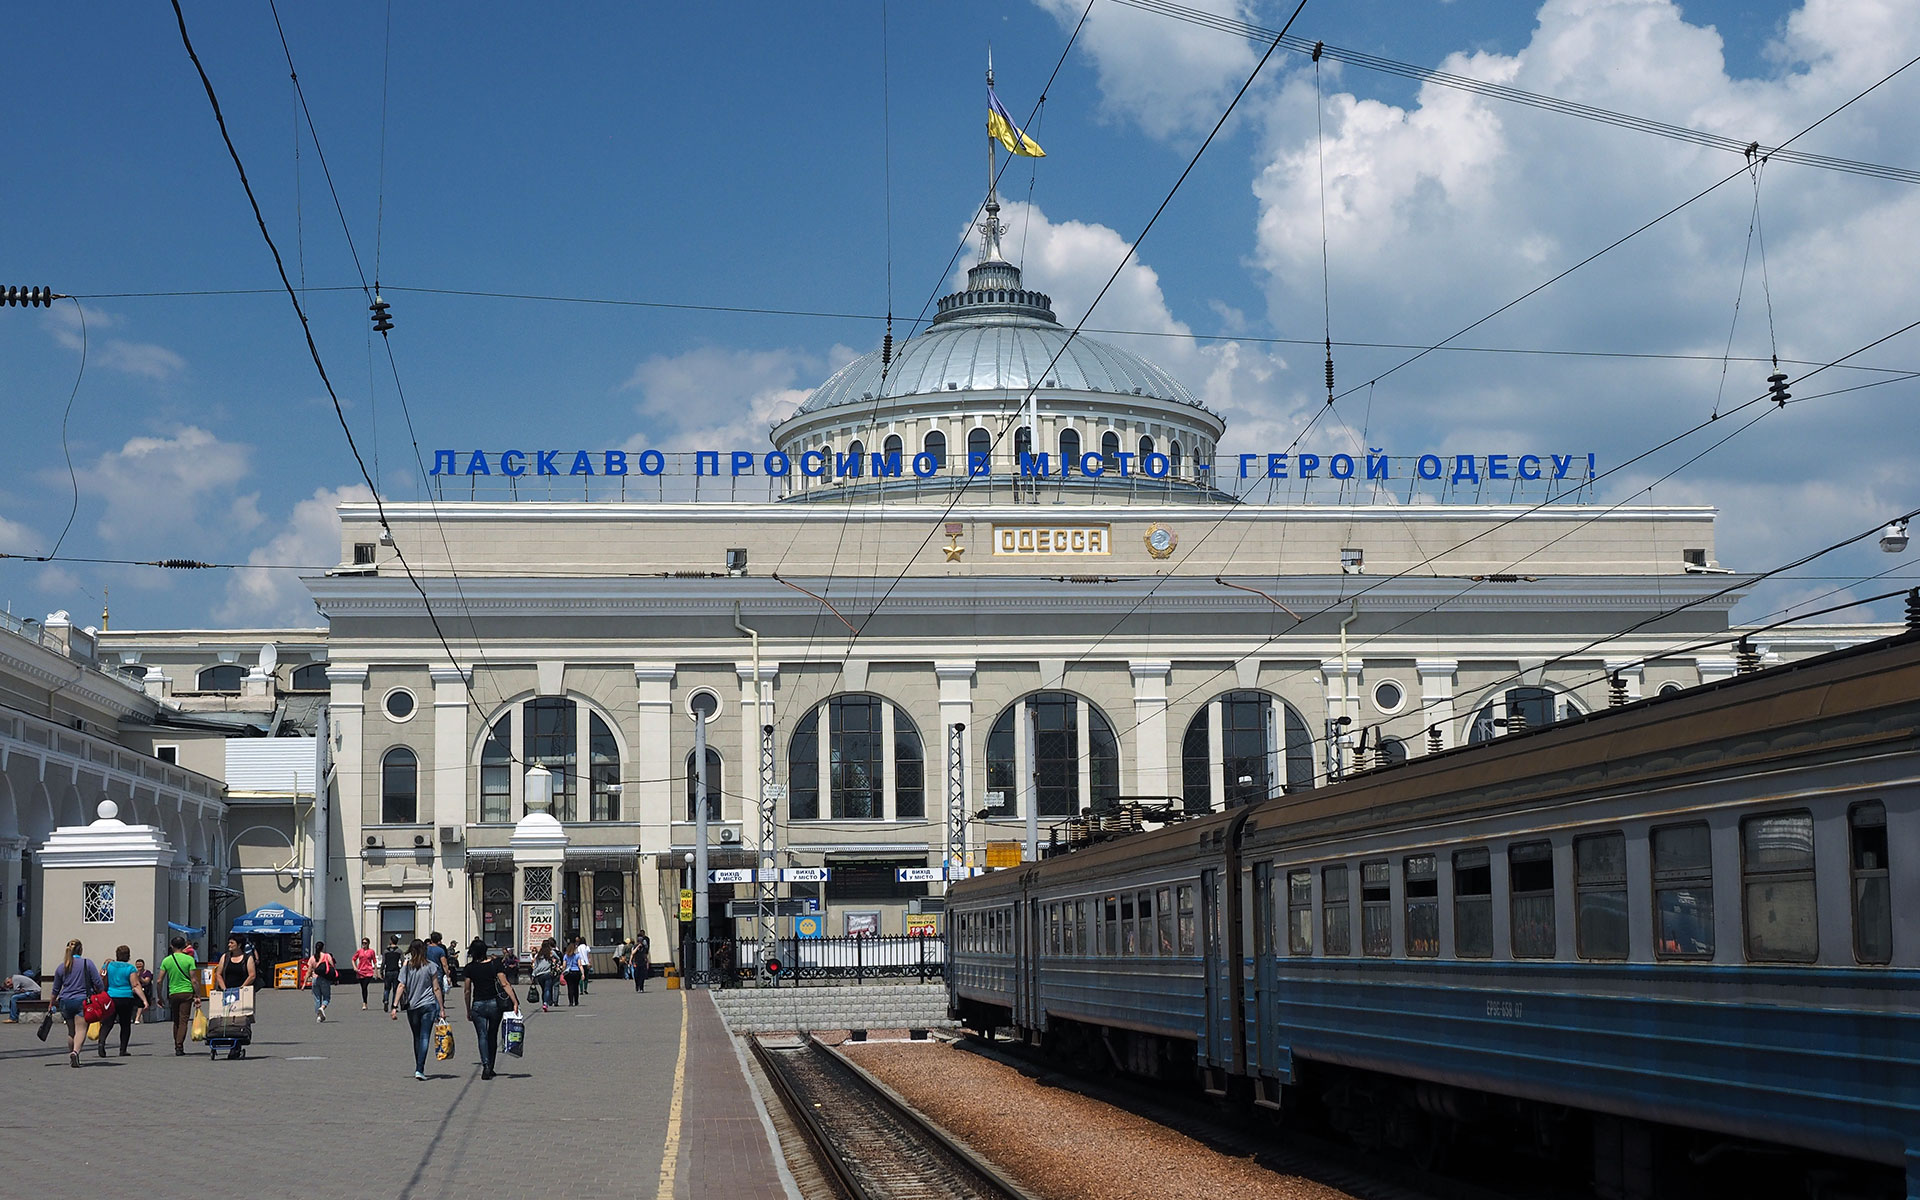 Odessa railway station (photo © hidden europe)